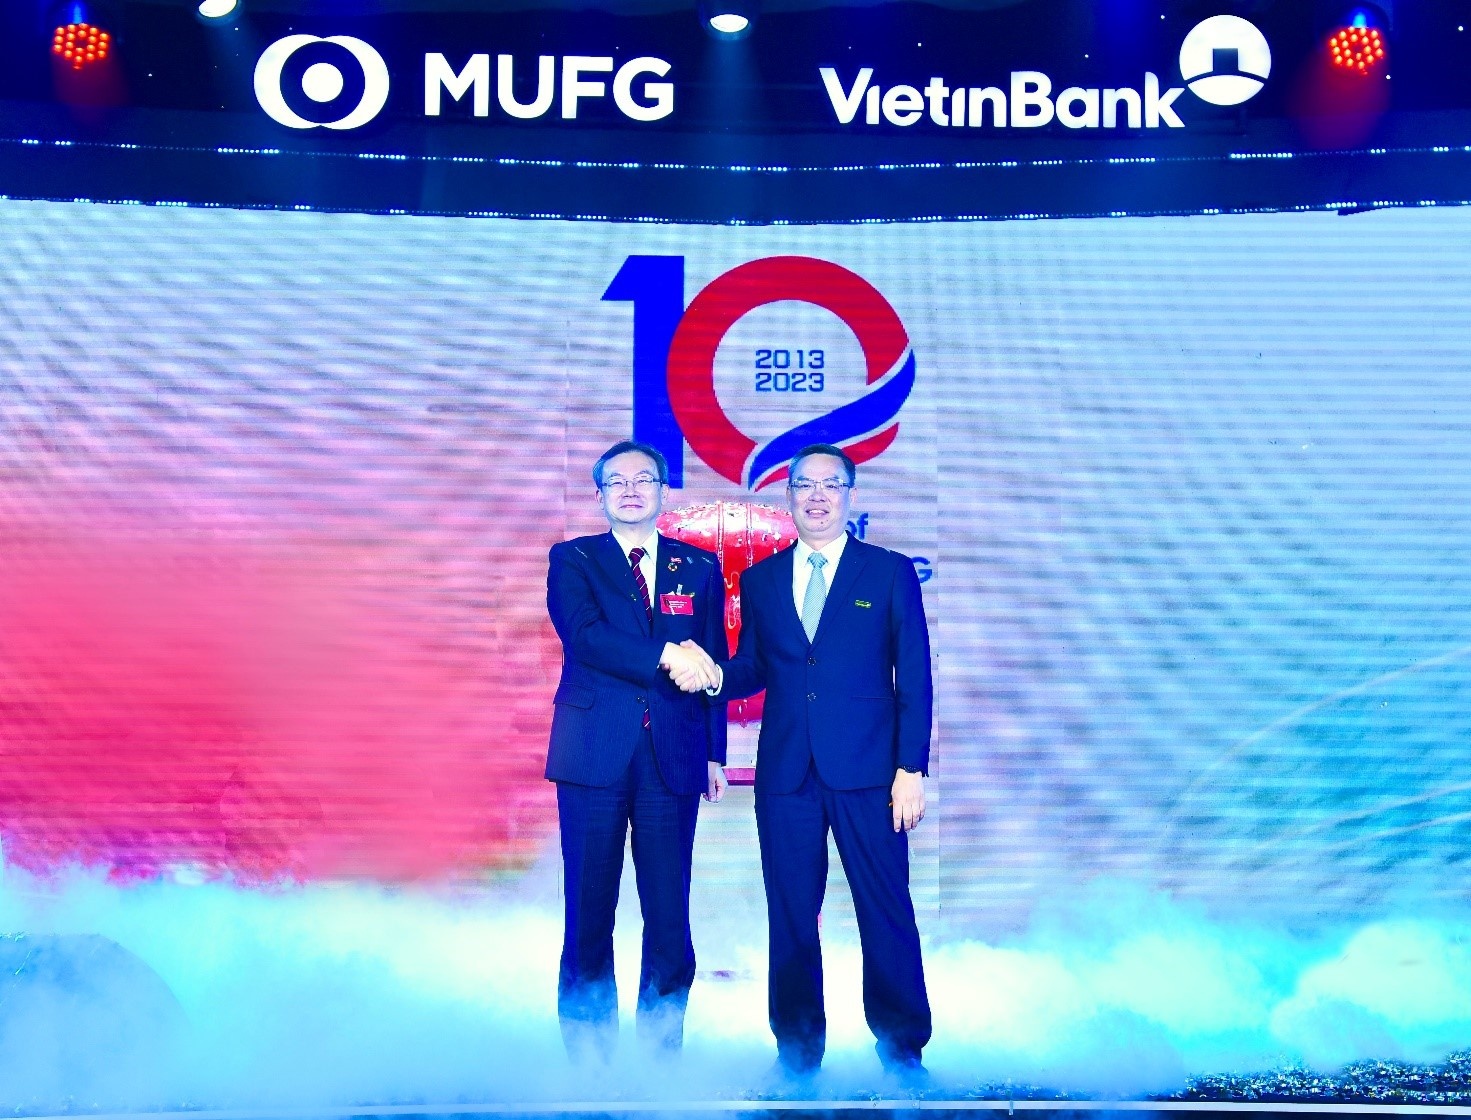 VietinBank and MUFG Bank celebrate 10 years of strategic alliance